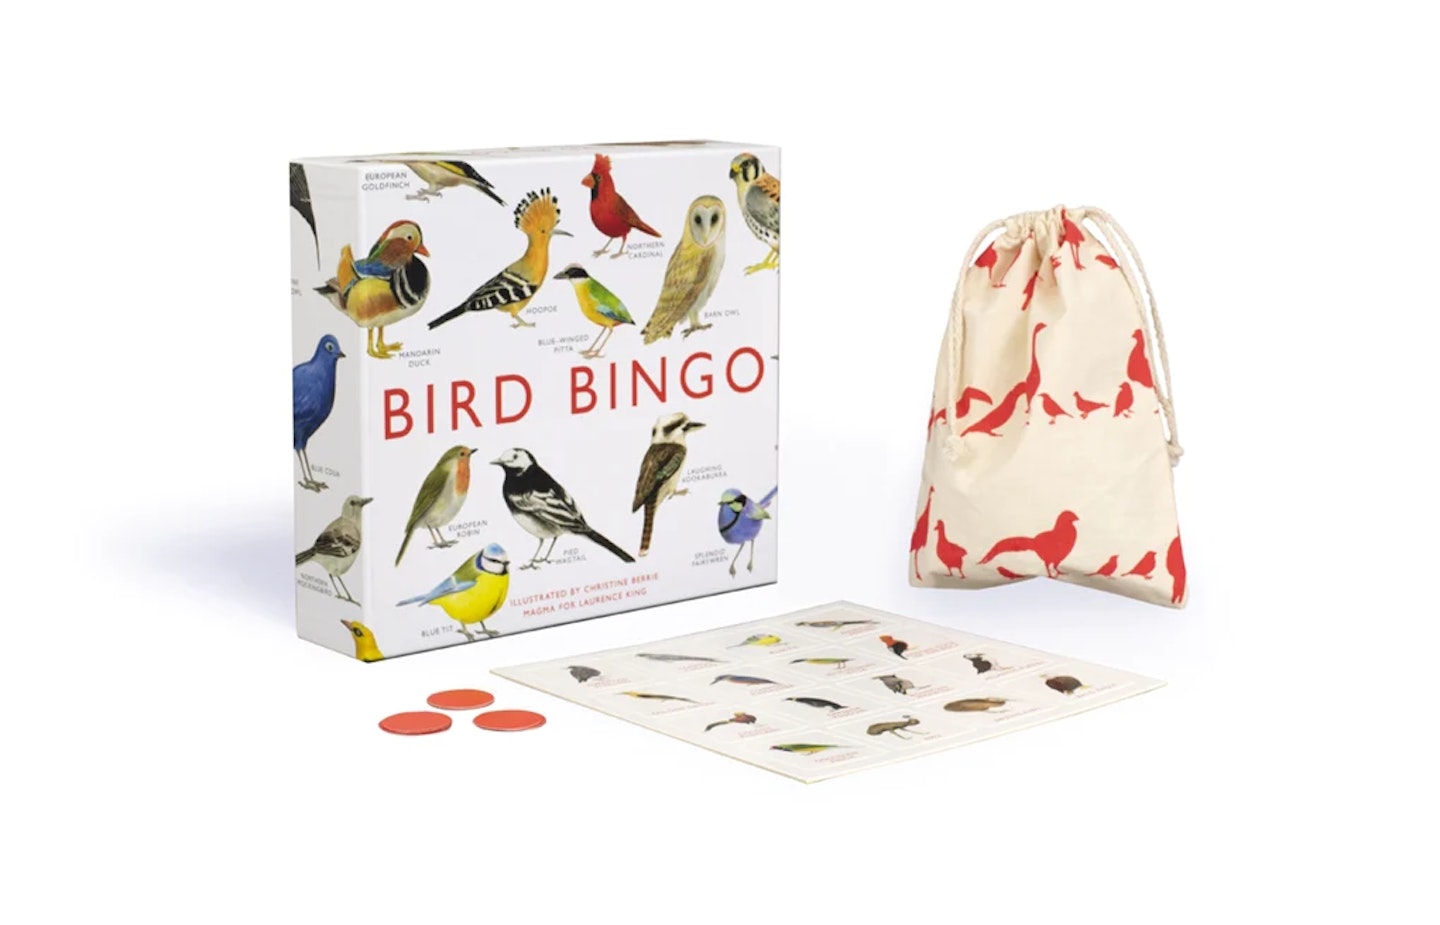 Bird Bingo game box and contents